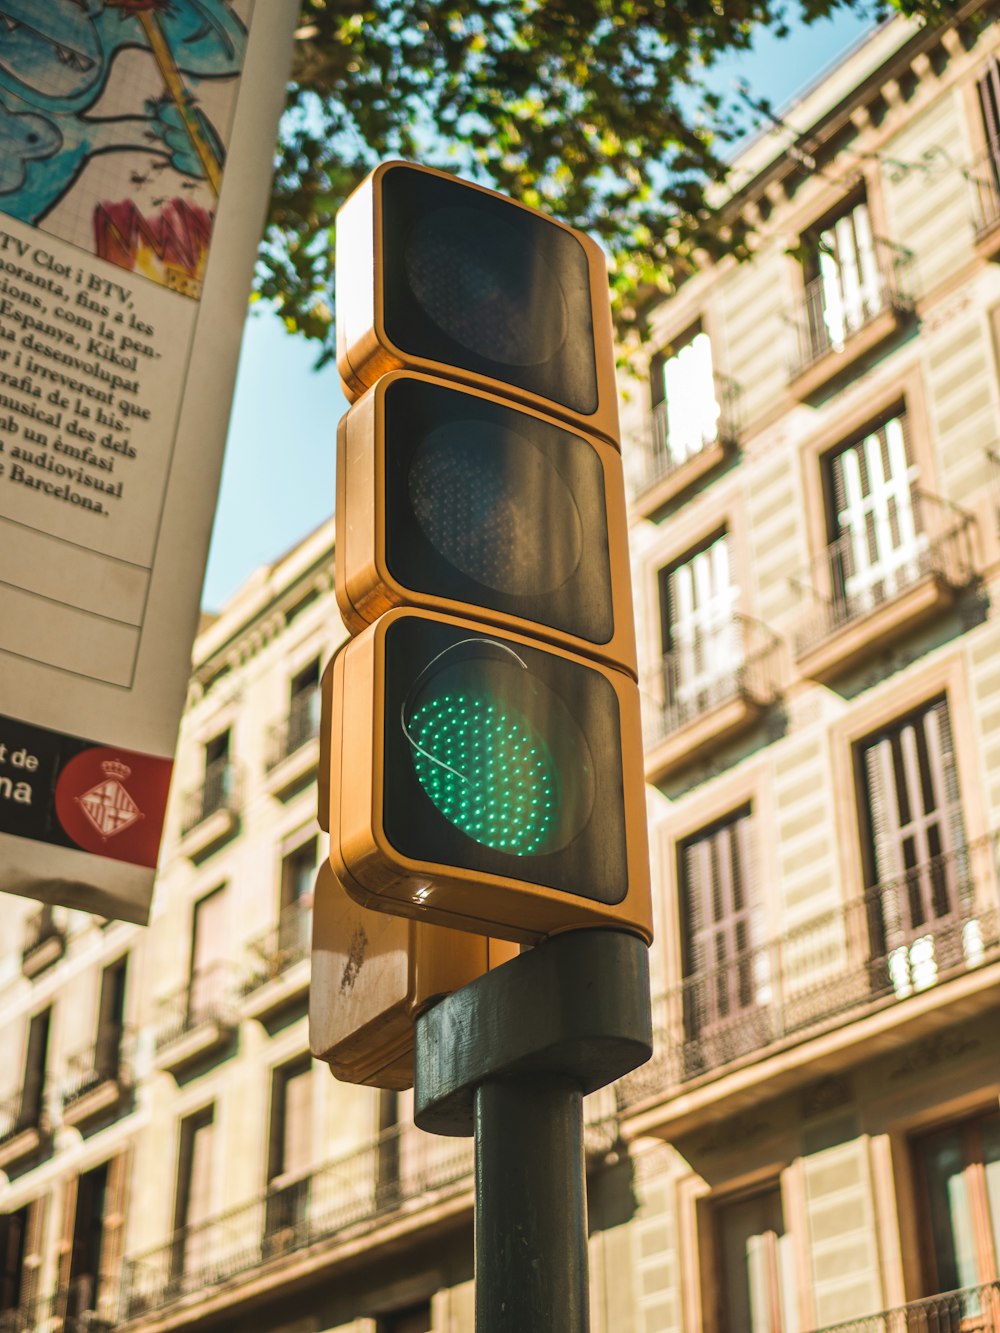 traffic light displaying green light